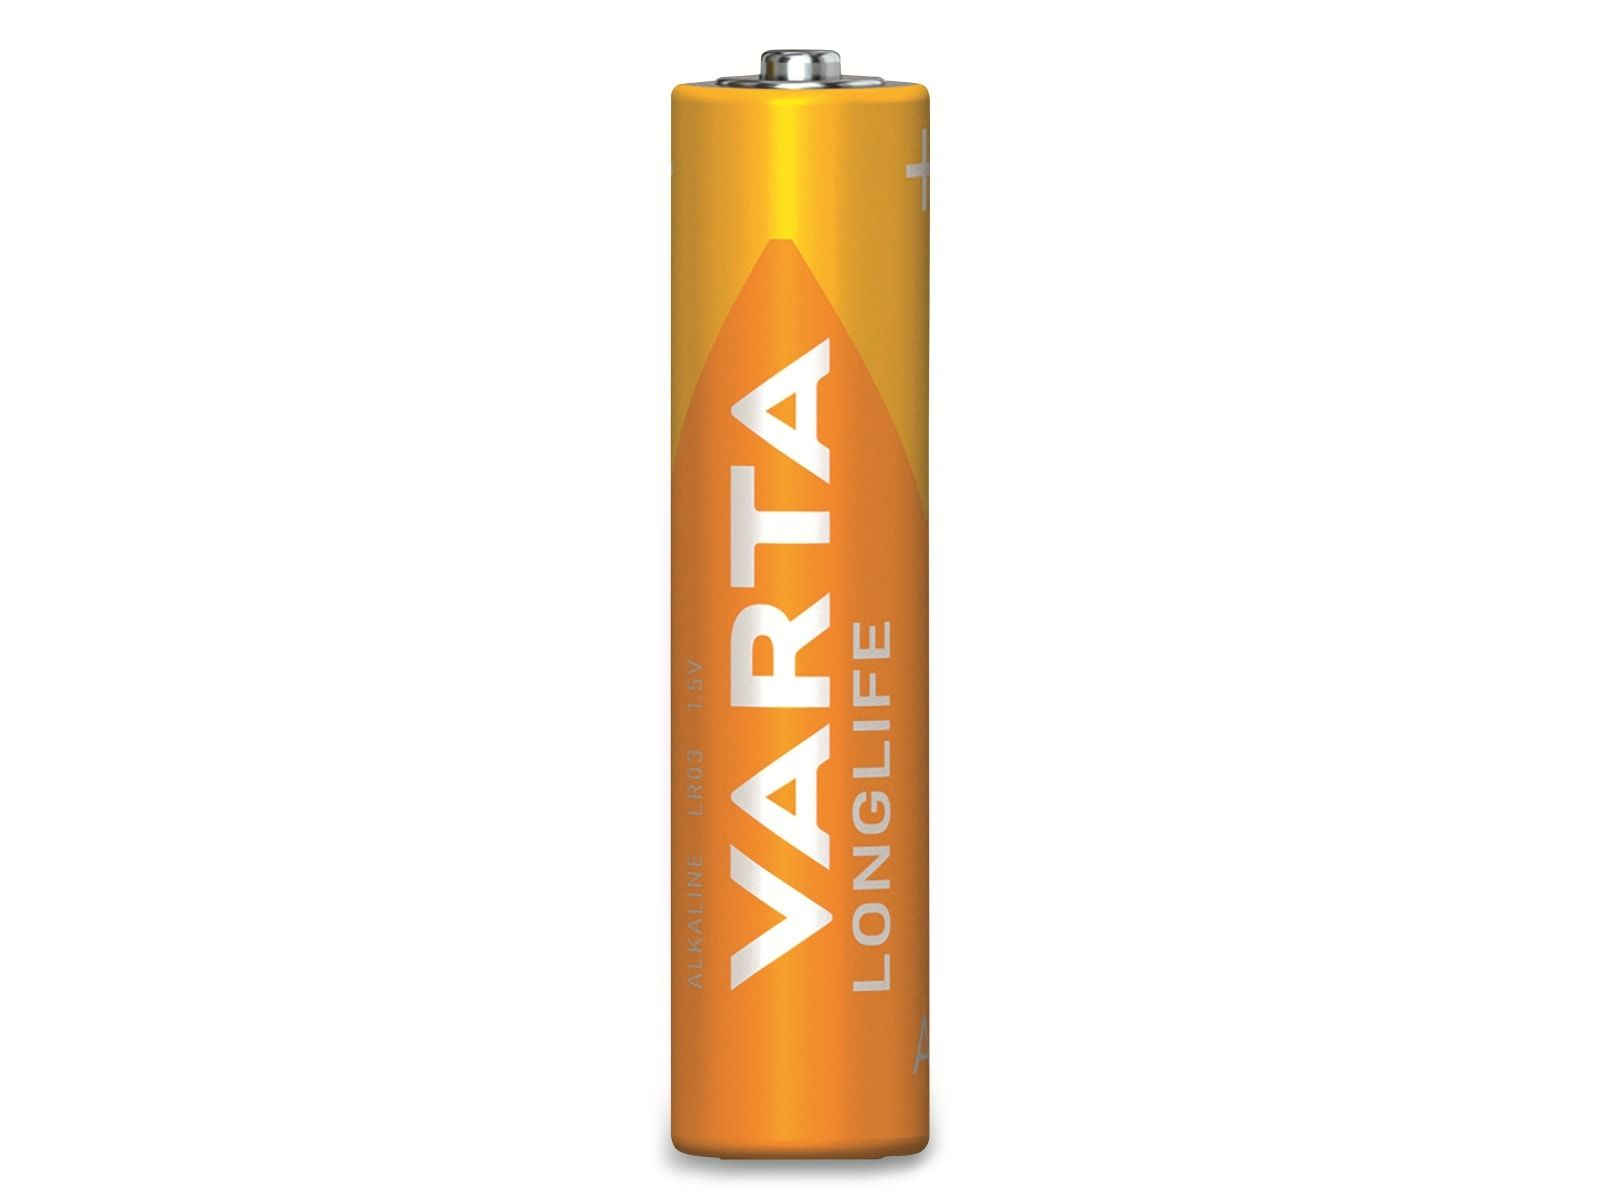 VARTA Longlife AAA distancia Mando Ah Volt, 1.5 Batterie Blister) 4103 Micro (4er AlMn, Batterie, 1.2